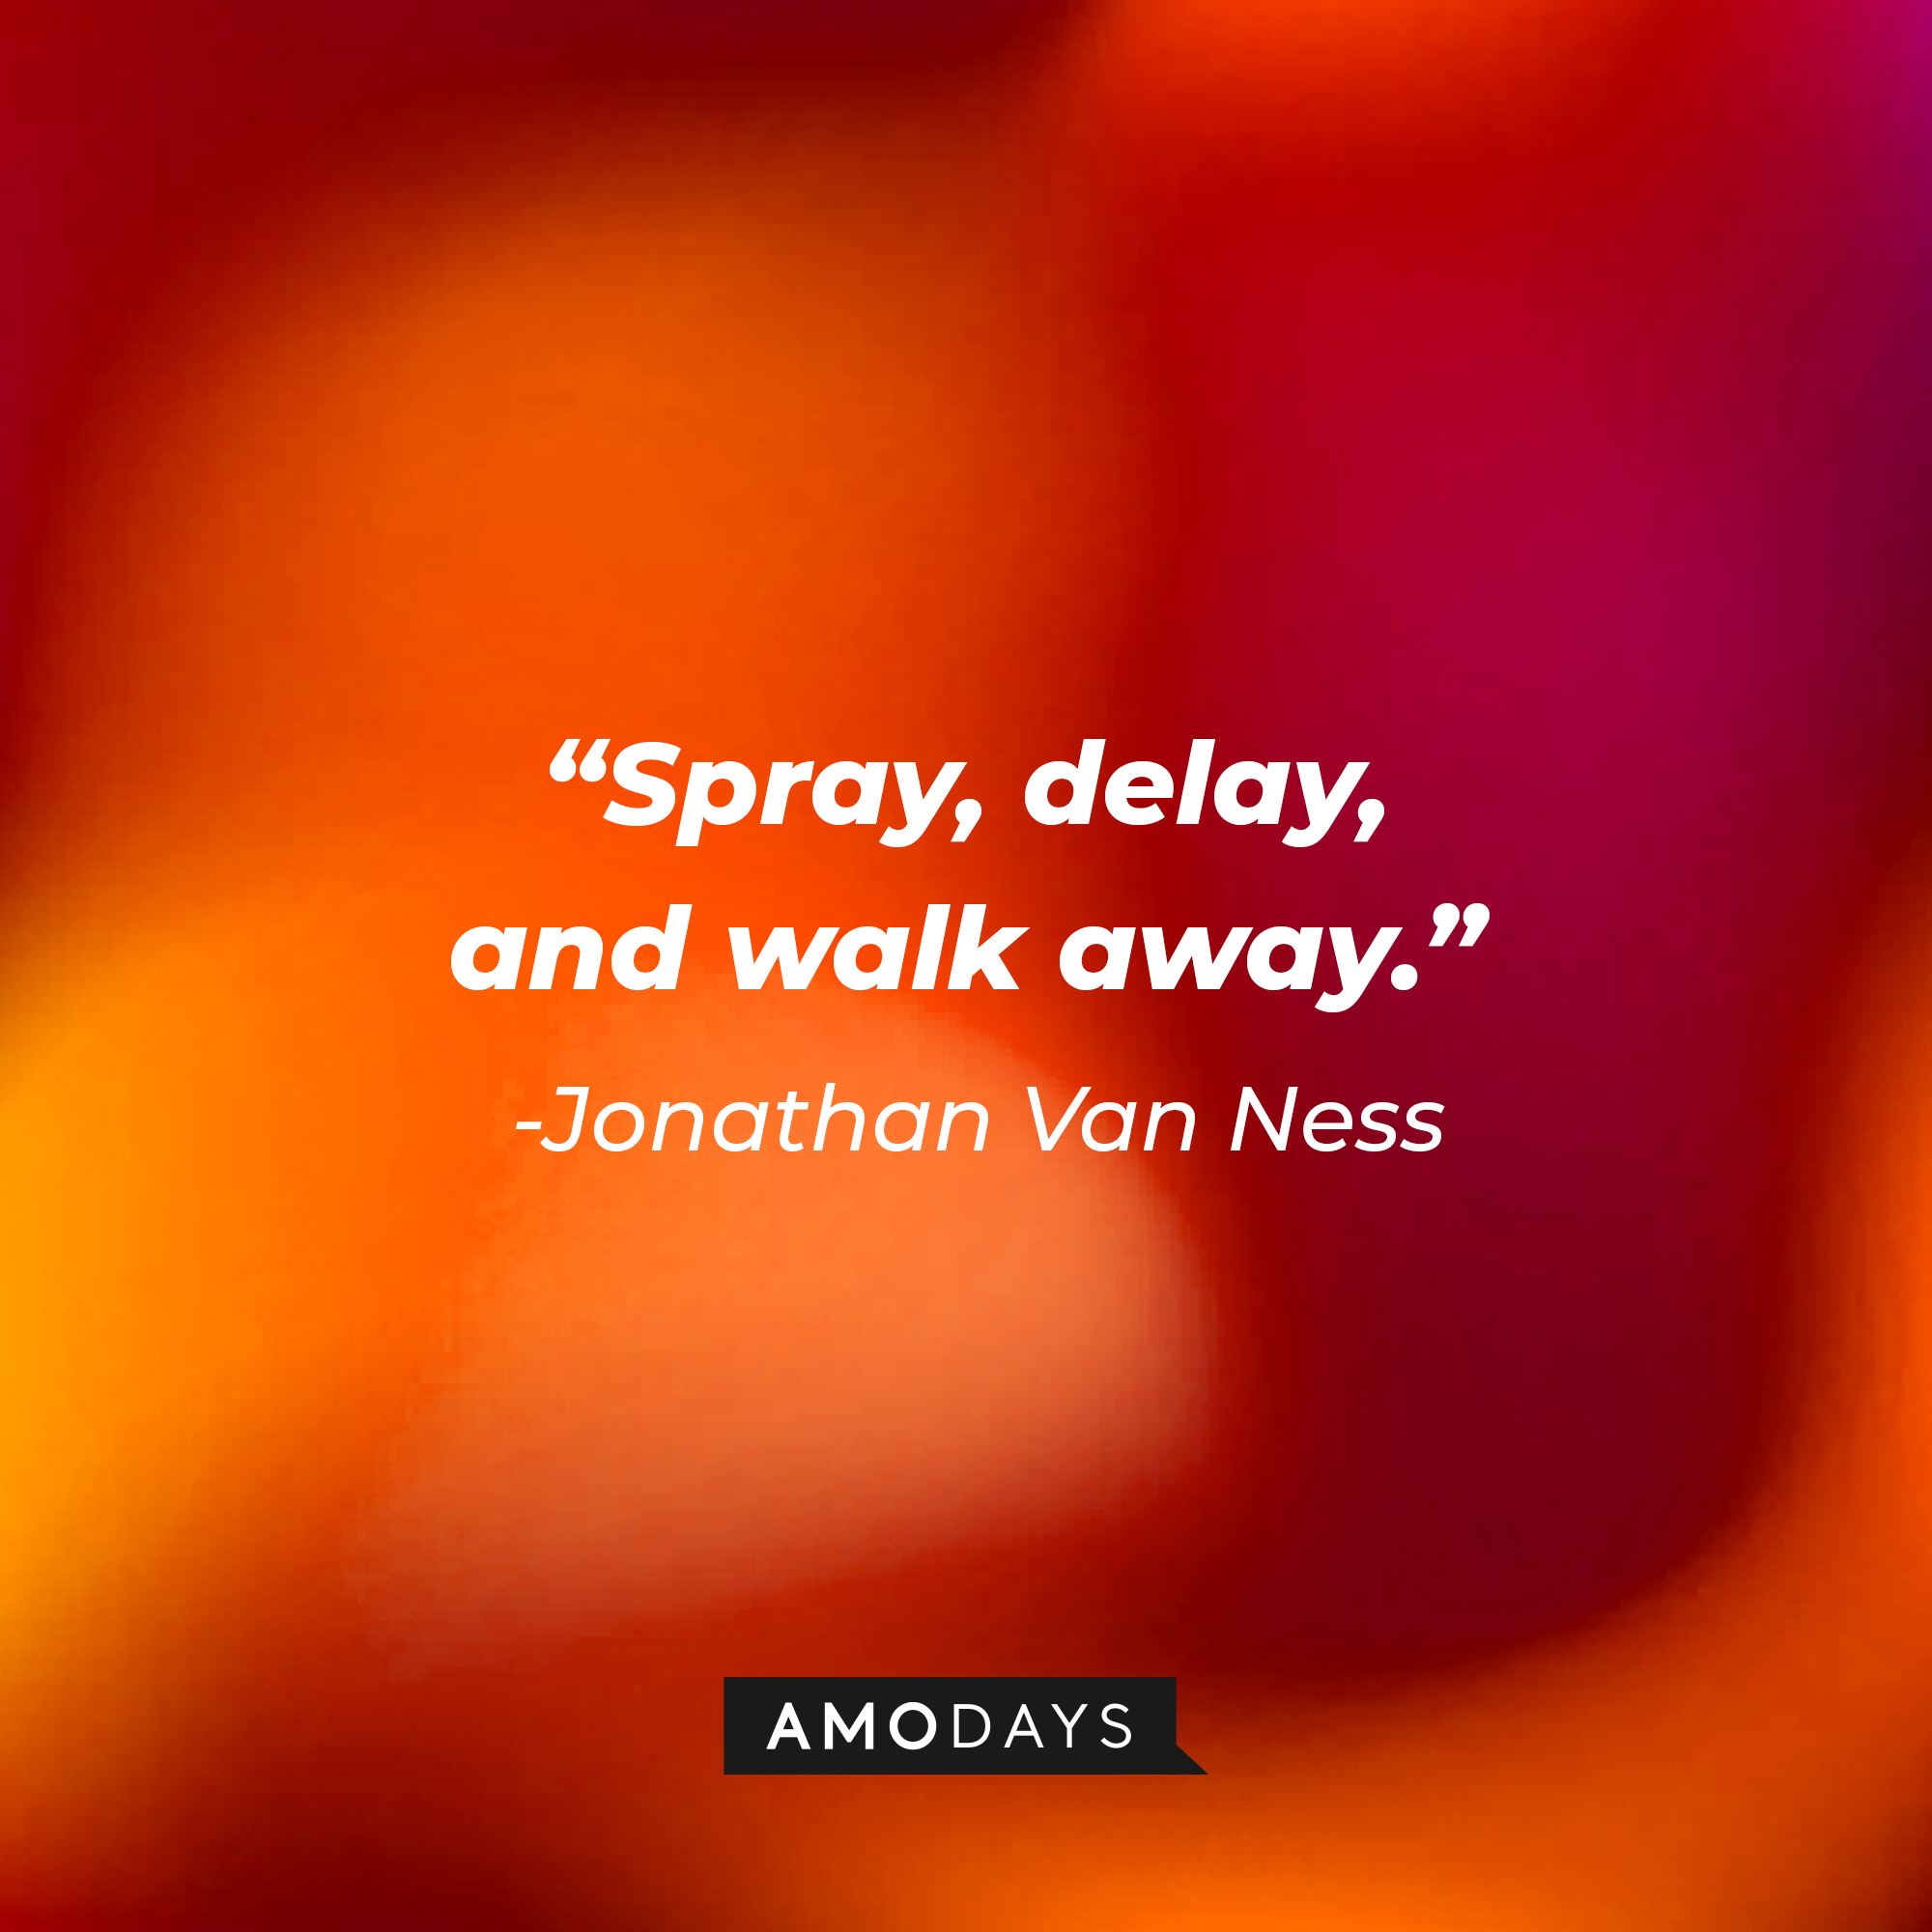 Jonathan Van Ness’ quote: "Spray, delay, and walk away." | Image: AmoDays